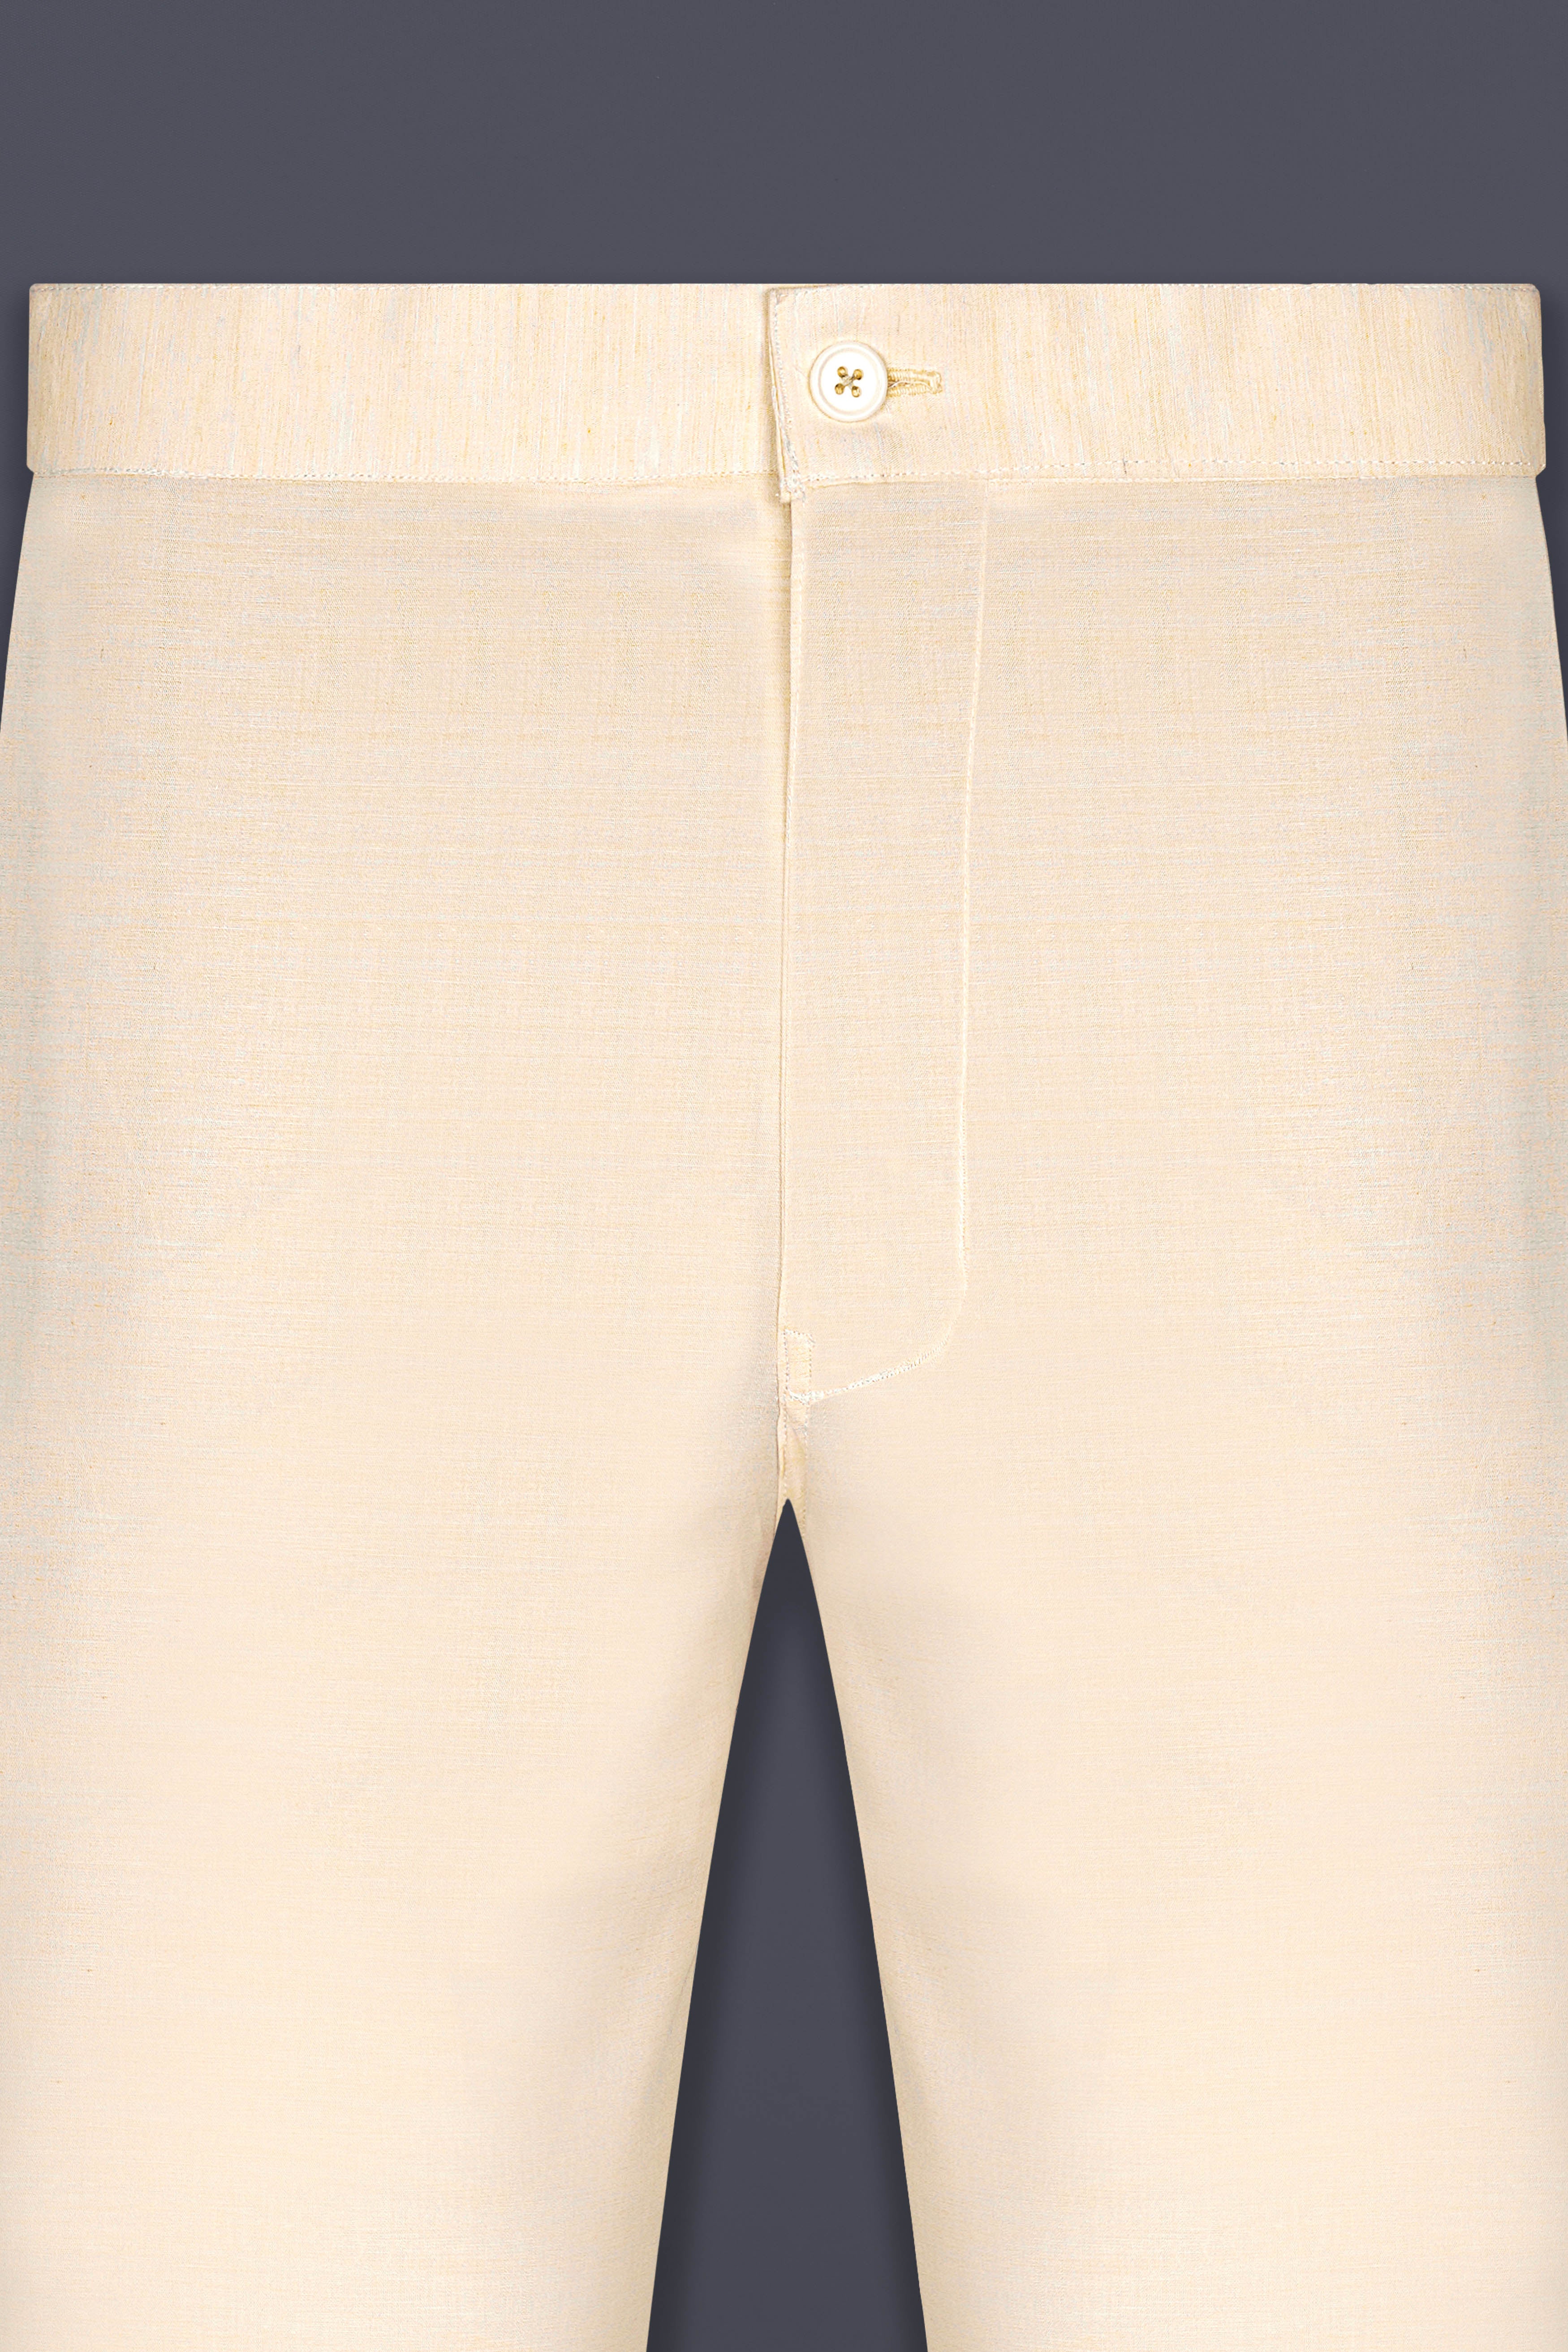 Karry Cream Royal Oxford Cotton Lounge Pant